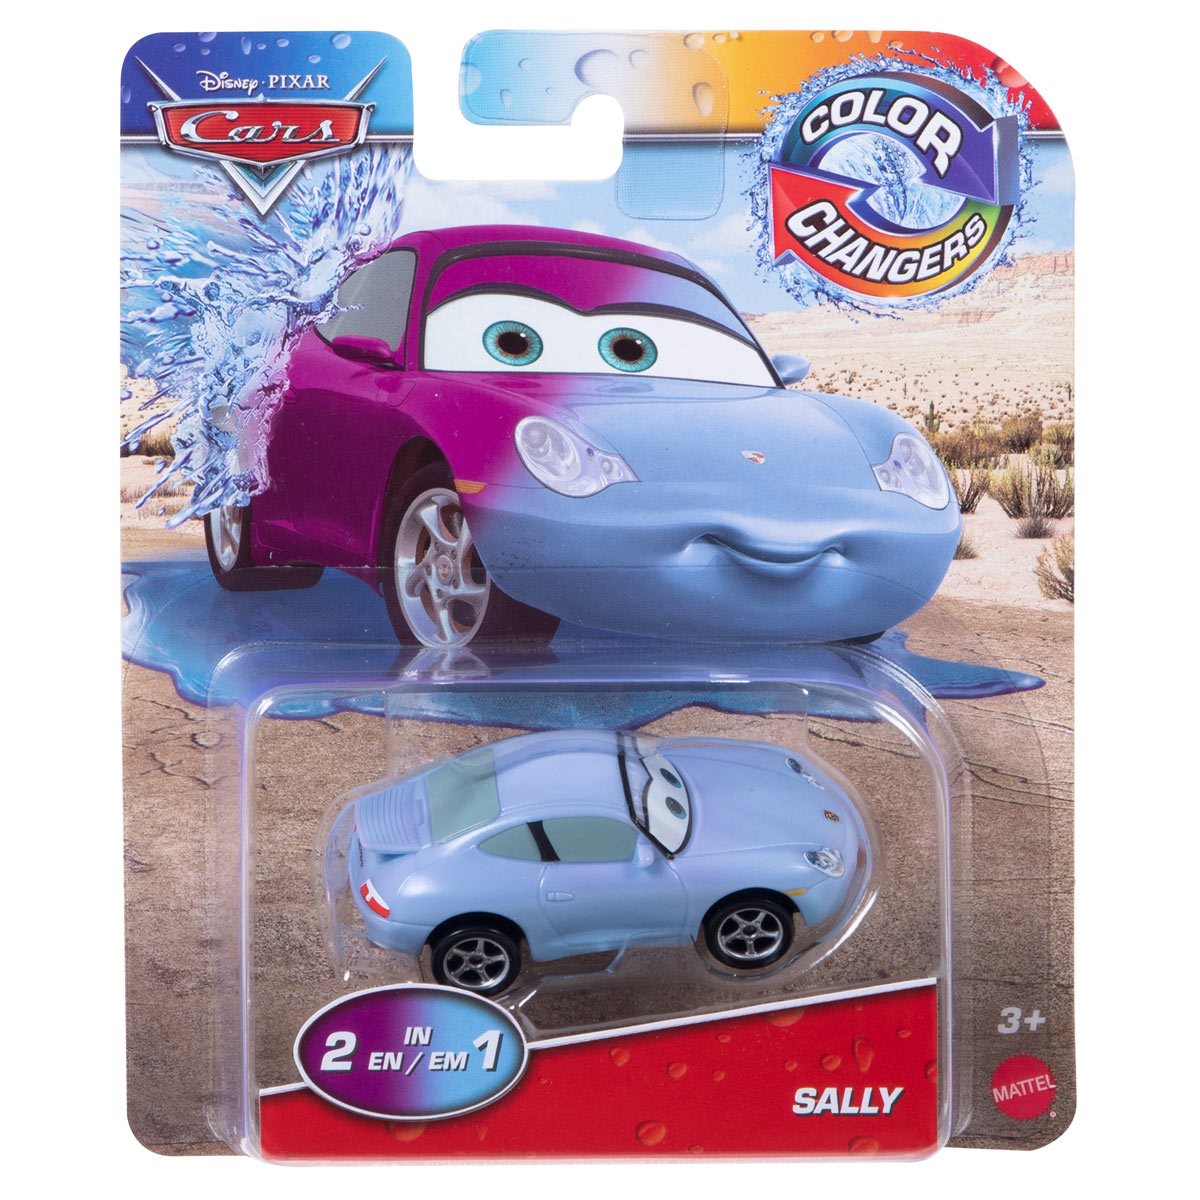 Disney PIXAR Cars Colour Changers 2 Farben Auto DHF46 Flash Rayo McQueen 